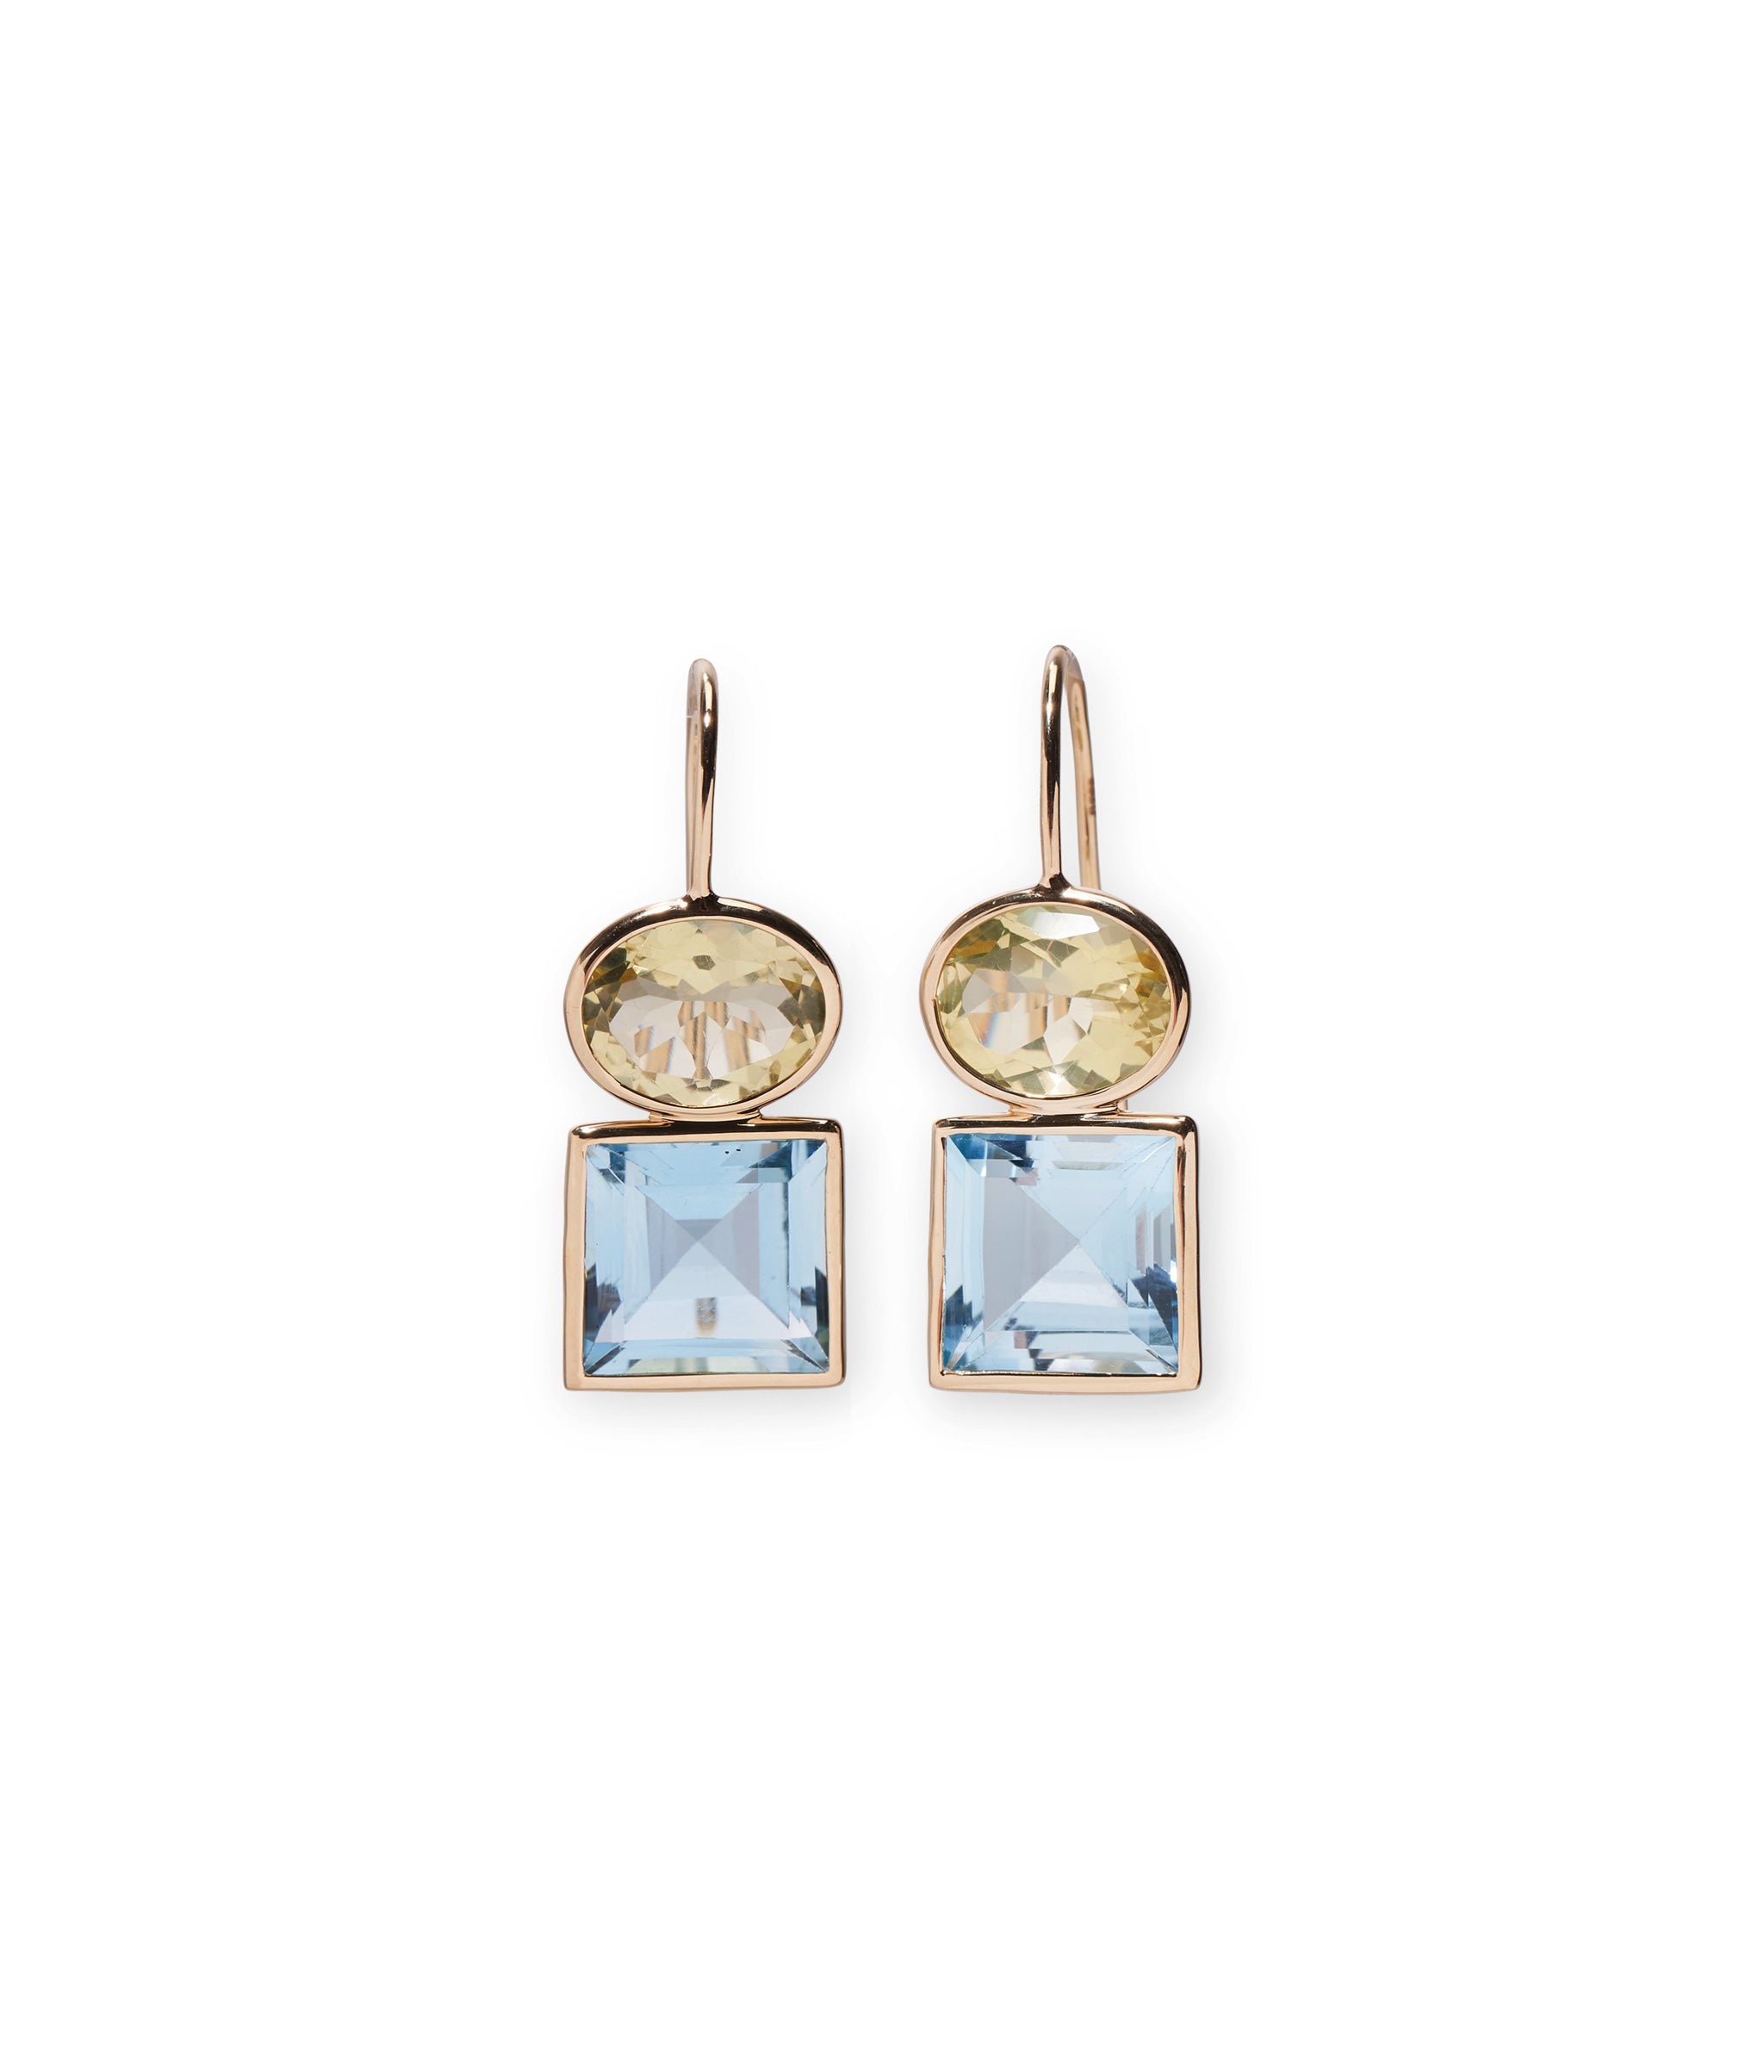 14k Duo Earrings in Lemon Quartz and Sky Blue Topaz. Faceted lemon quartz oval and sky blue topaz square stones with 14k gold bezels